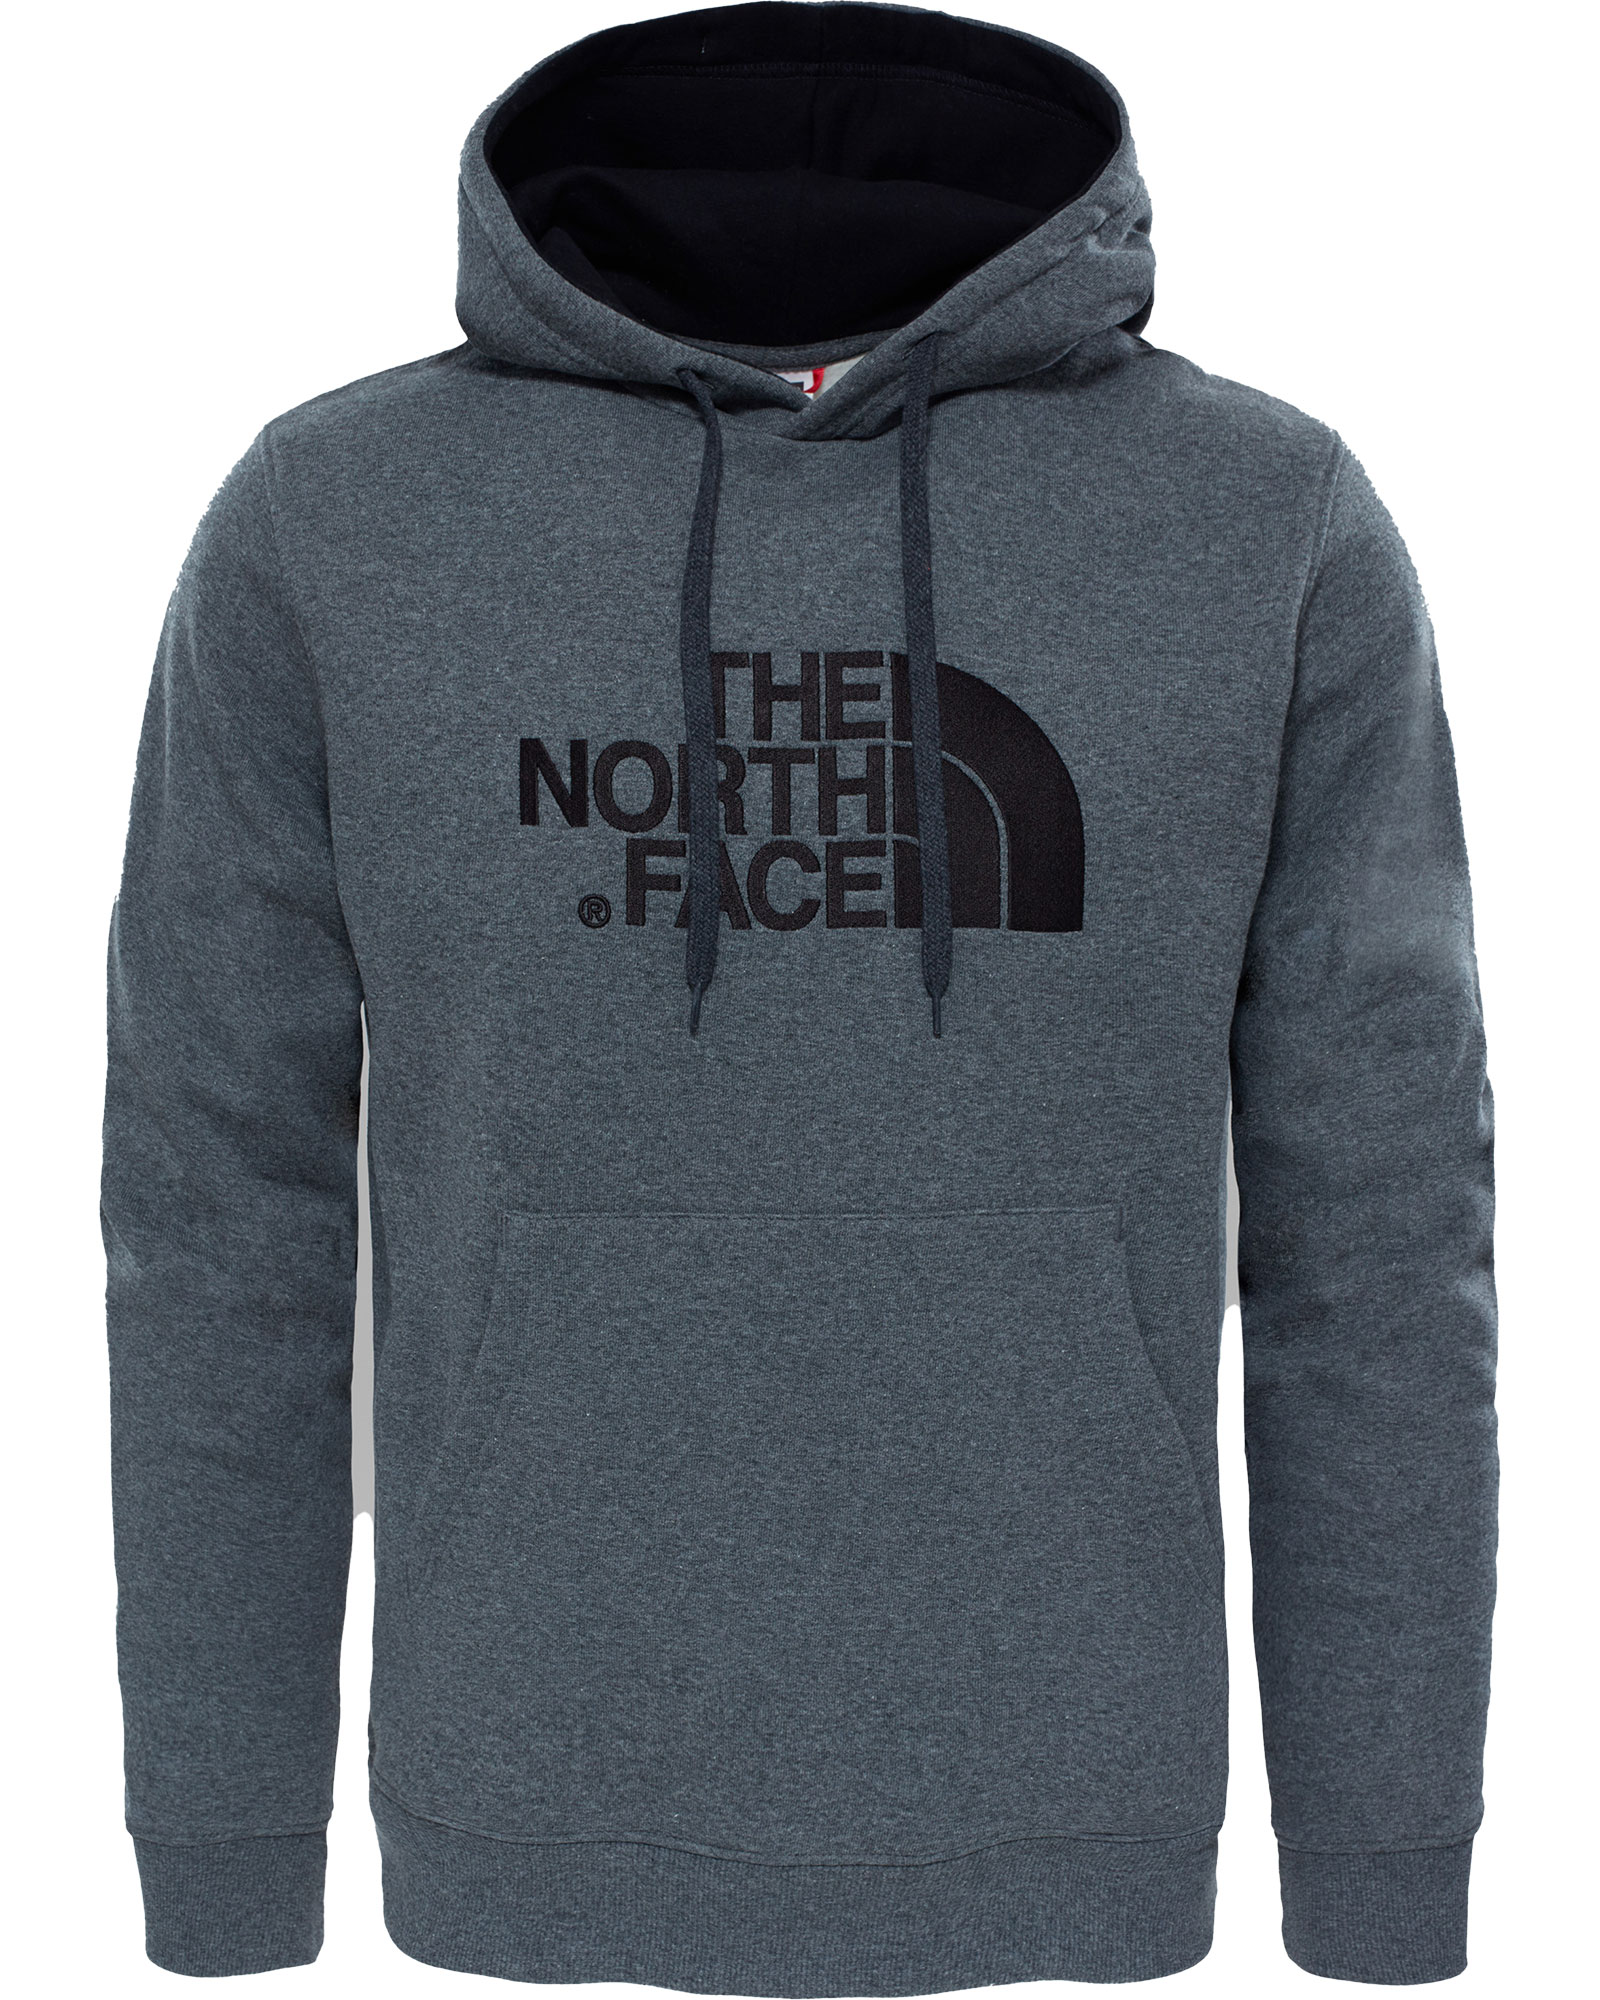 The North Face Drew Peak Men’s Hoodie - TNF Medium Grey Heather L